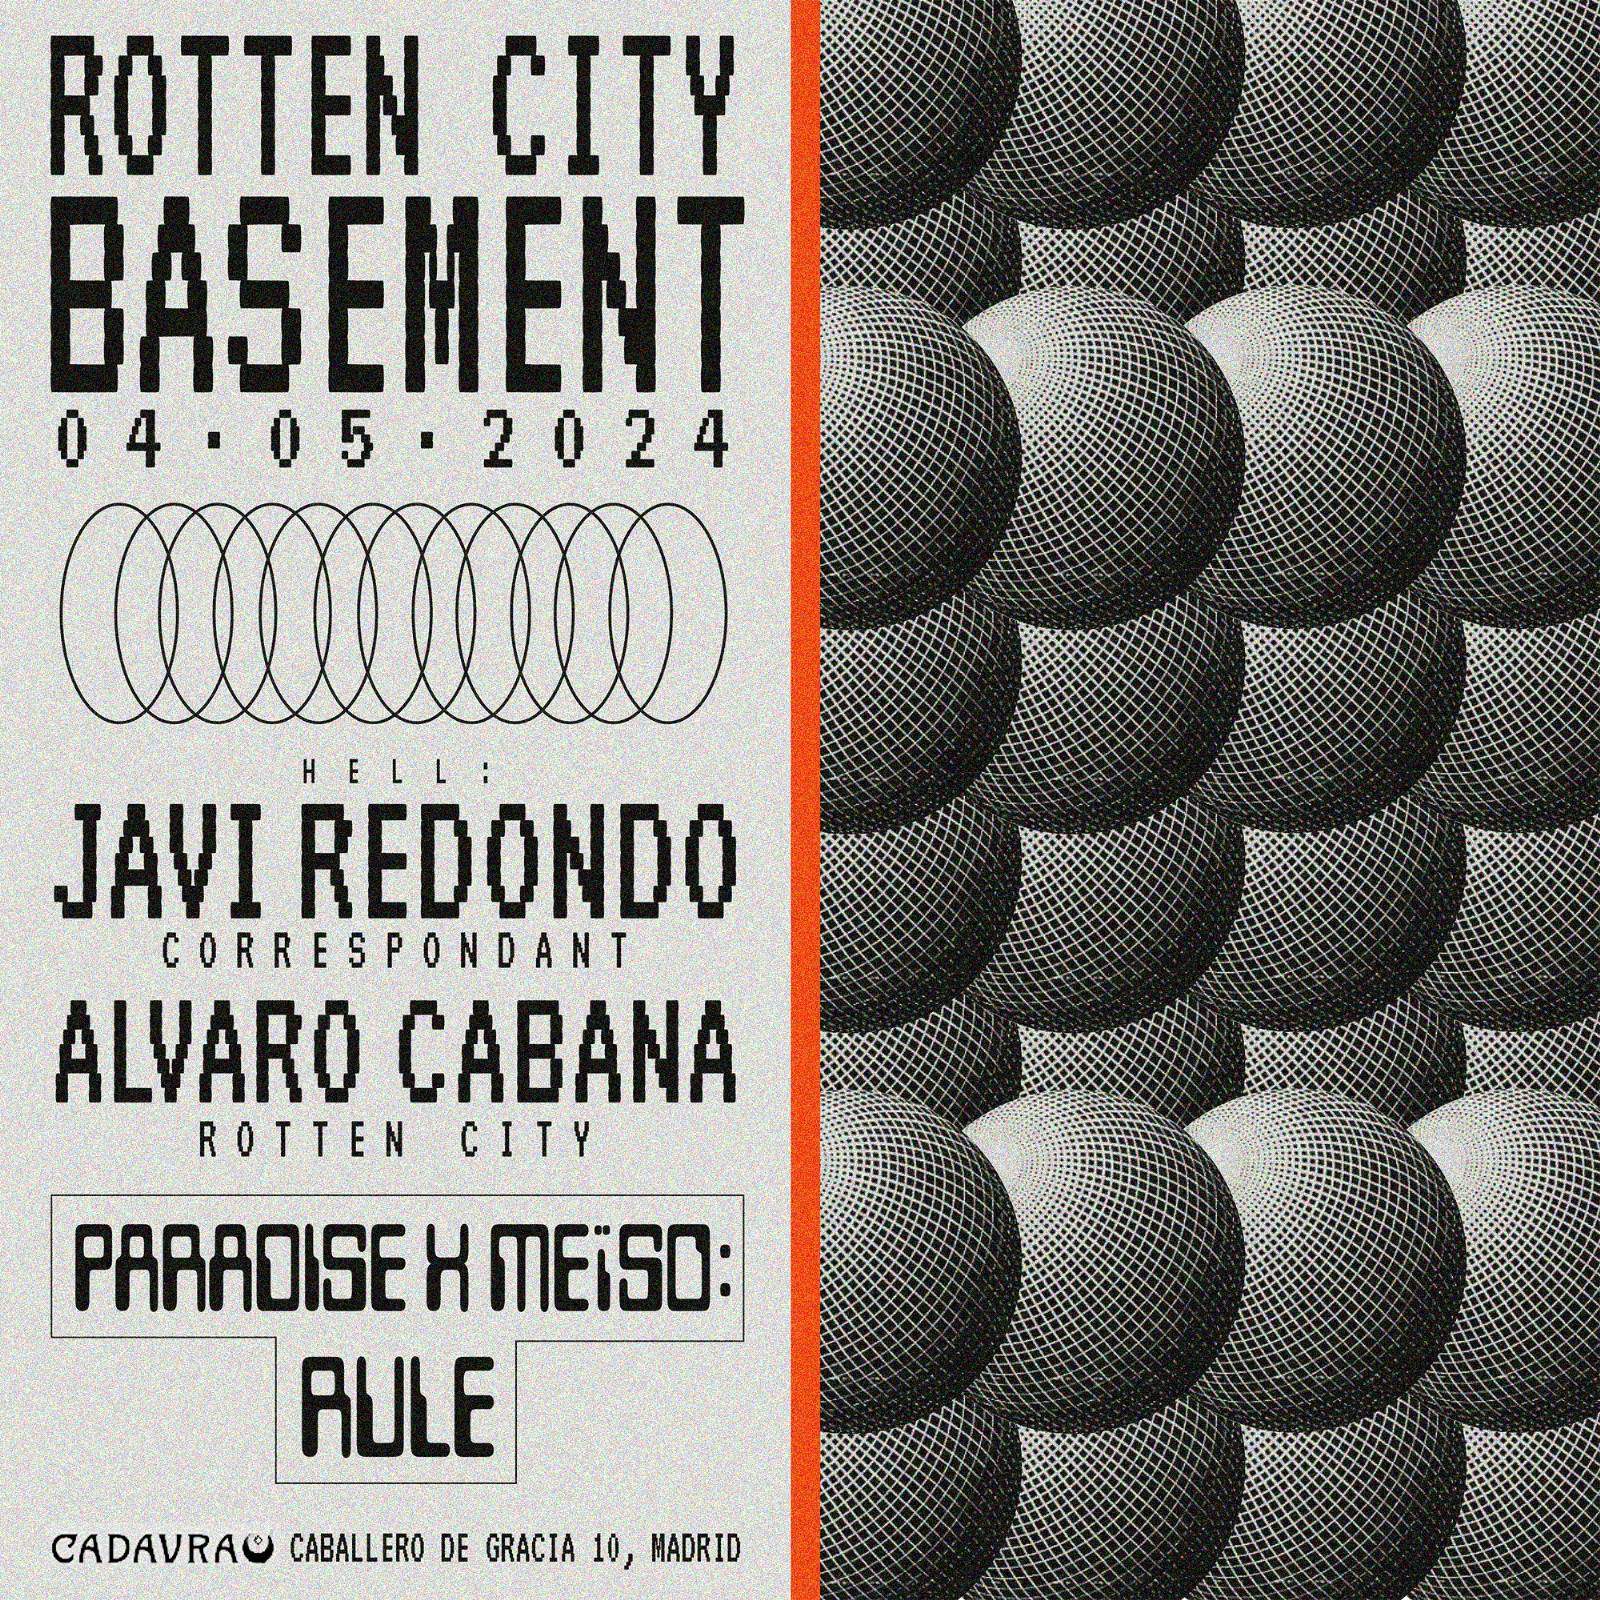 Rotten City Basement with Javi Redondo - フライヤー表